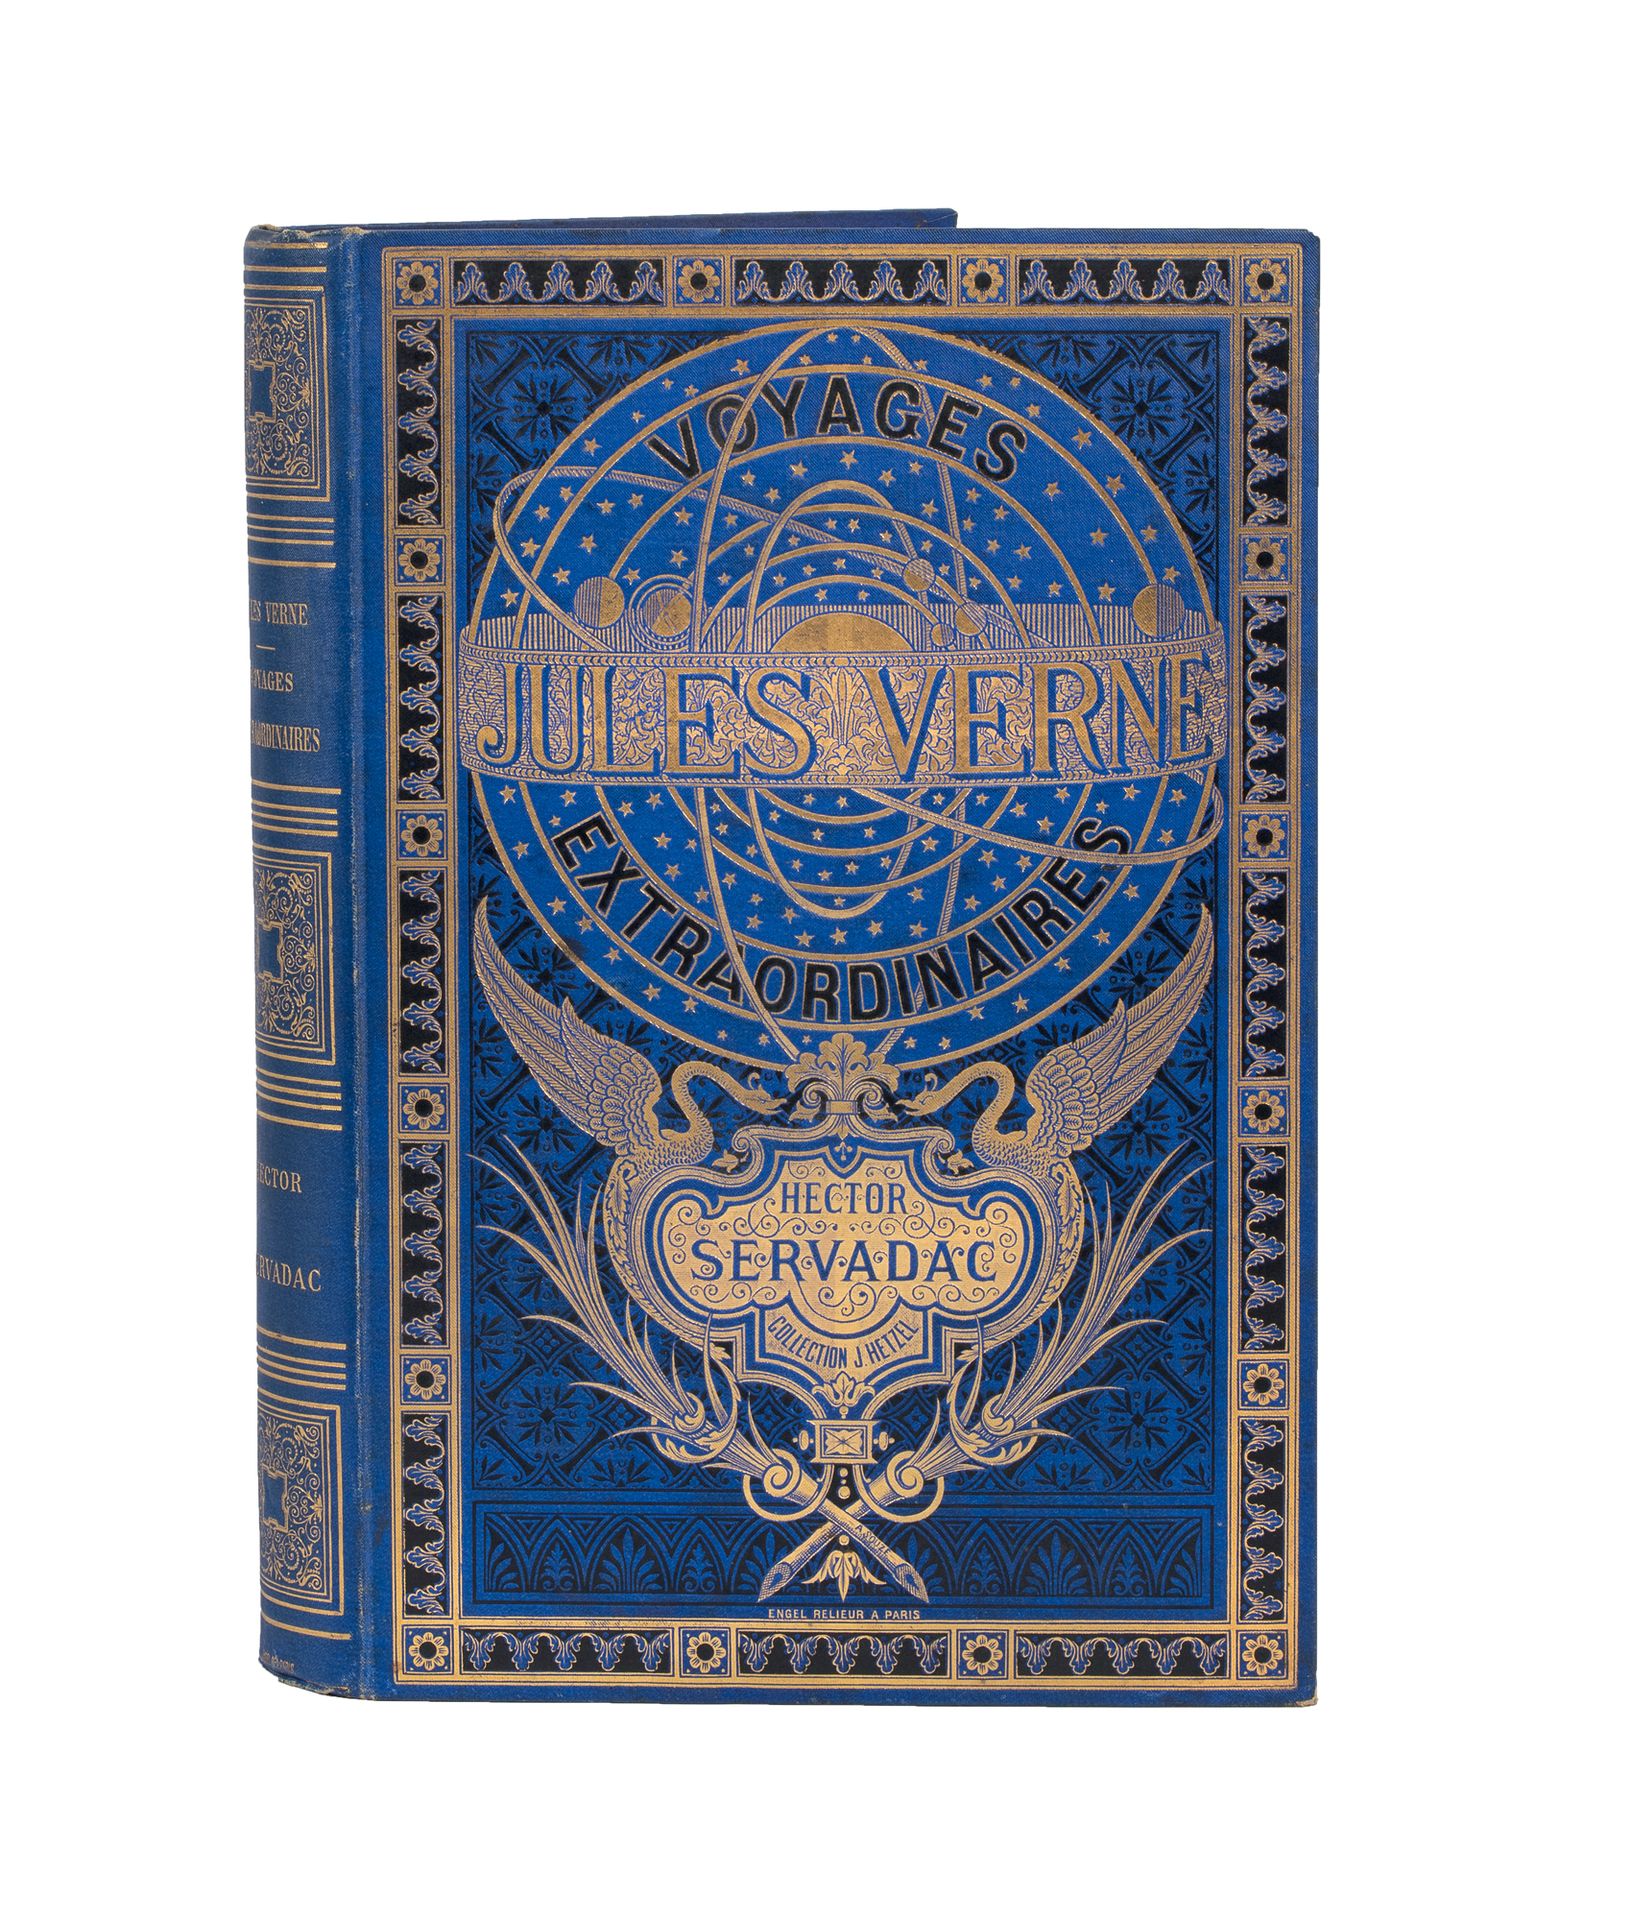 Null [Espaces célestes] Hector Servadac par Jules Verne. Illustrations de P. Phi&hellip;